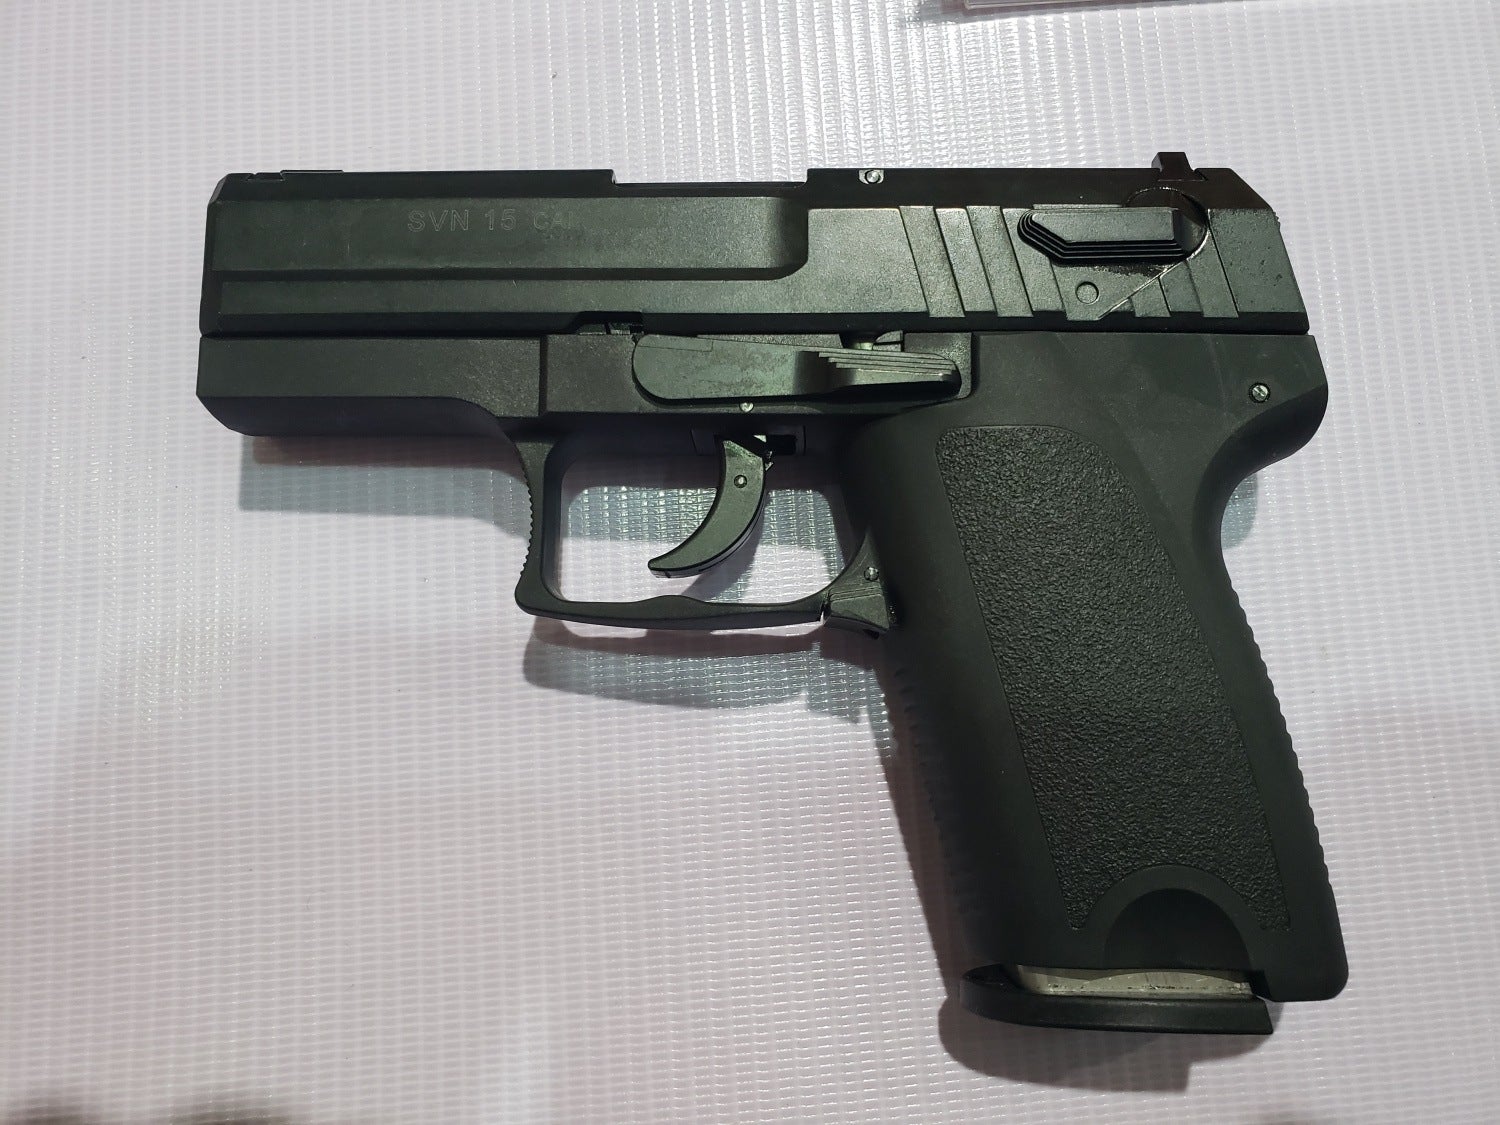 SVN 15 pistol